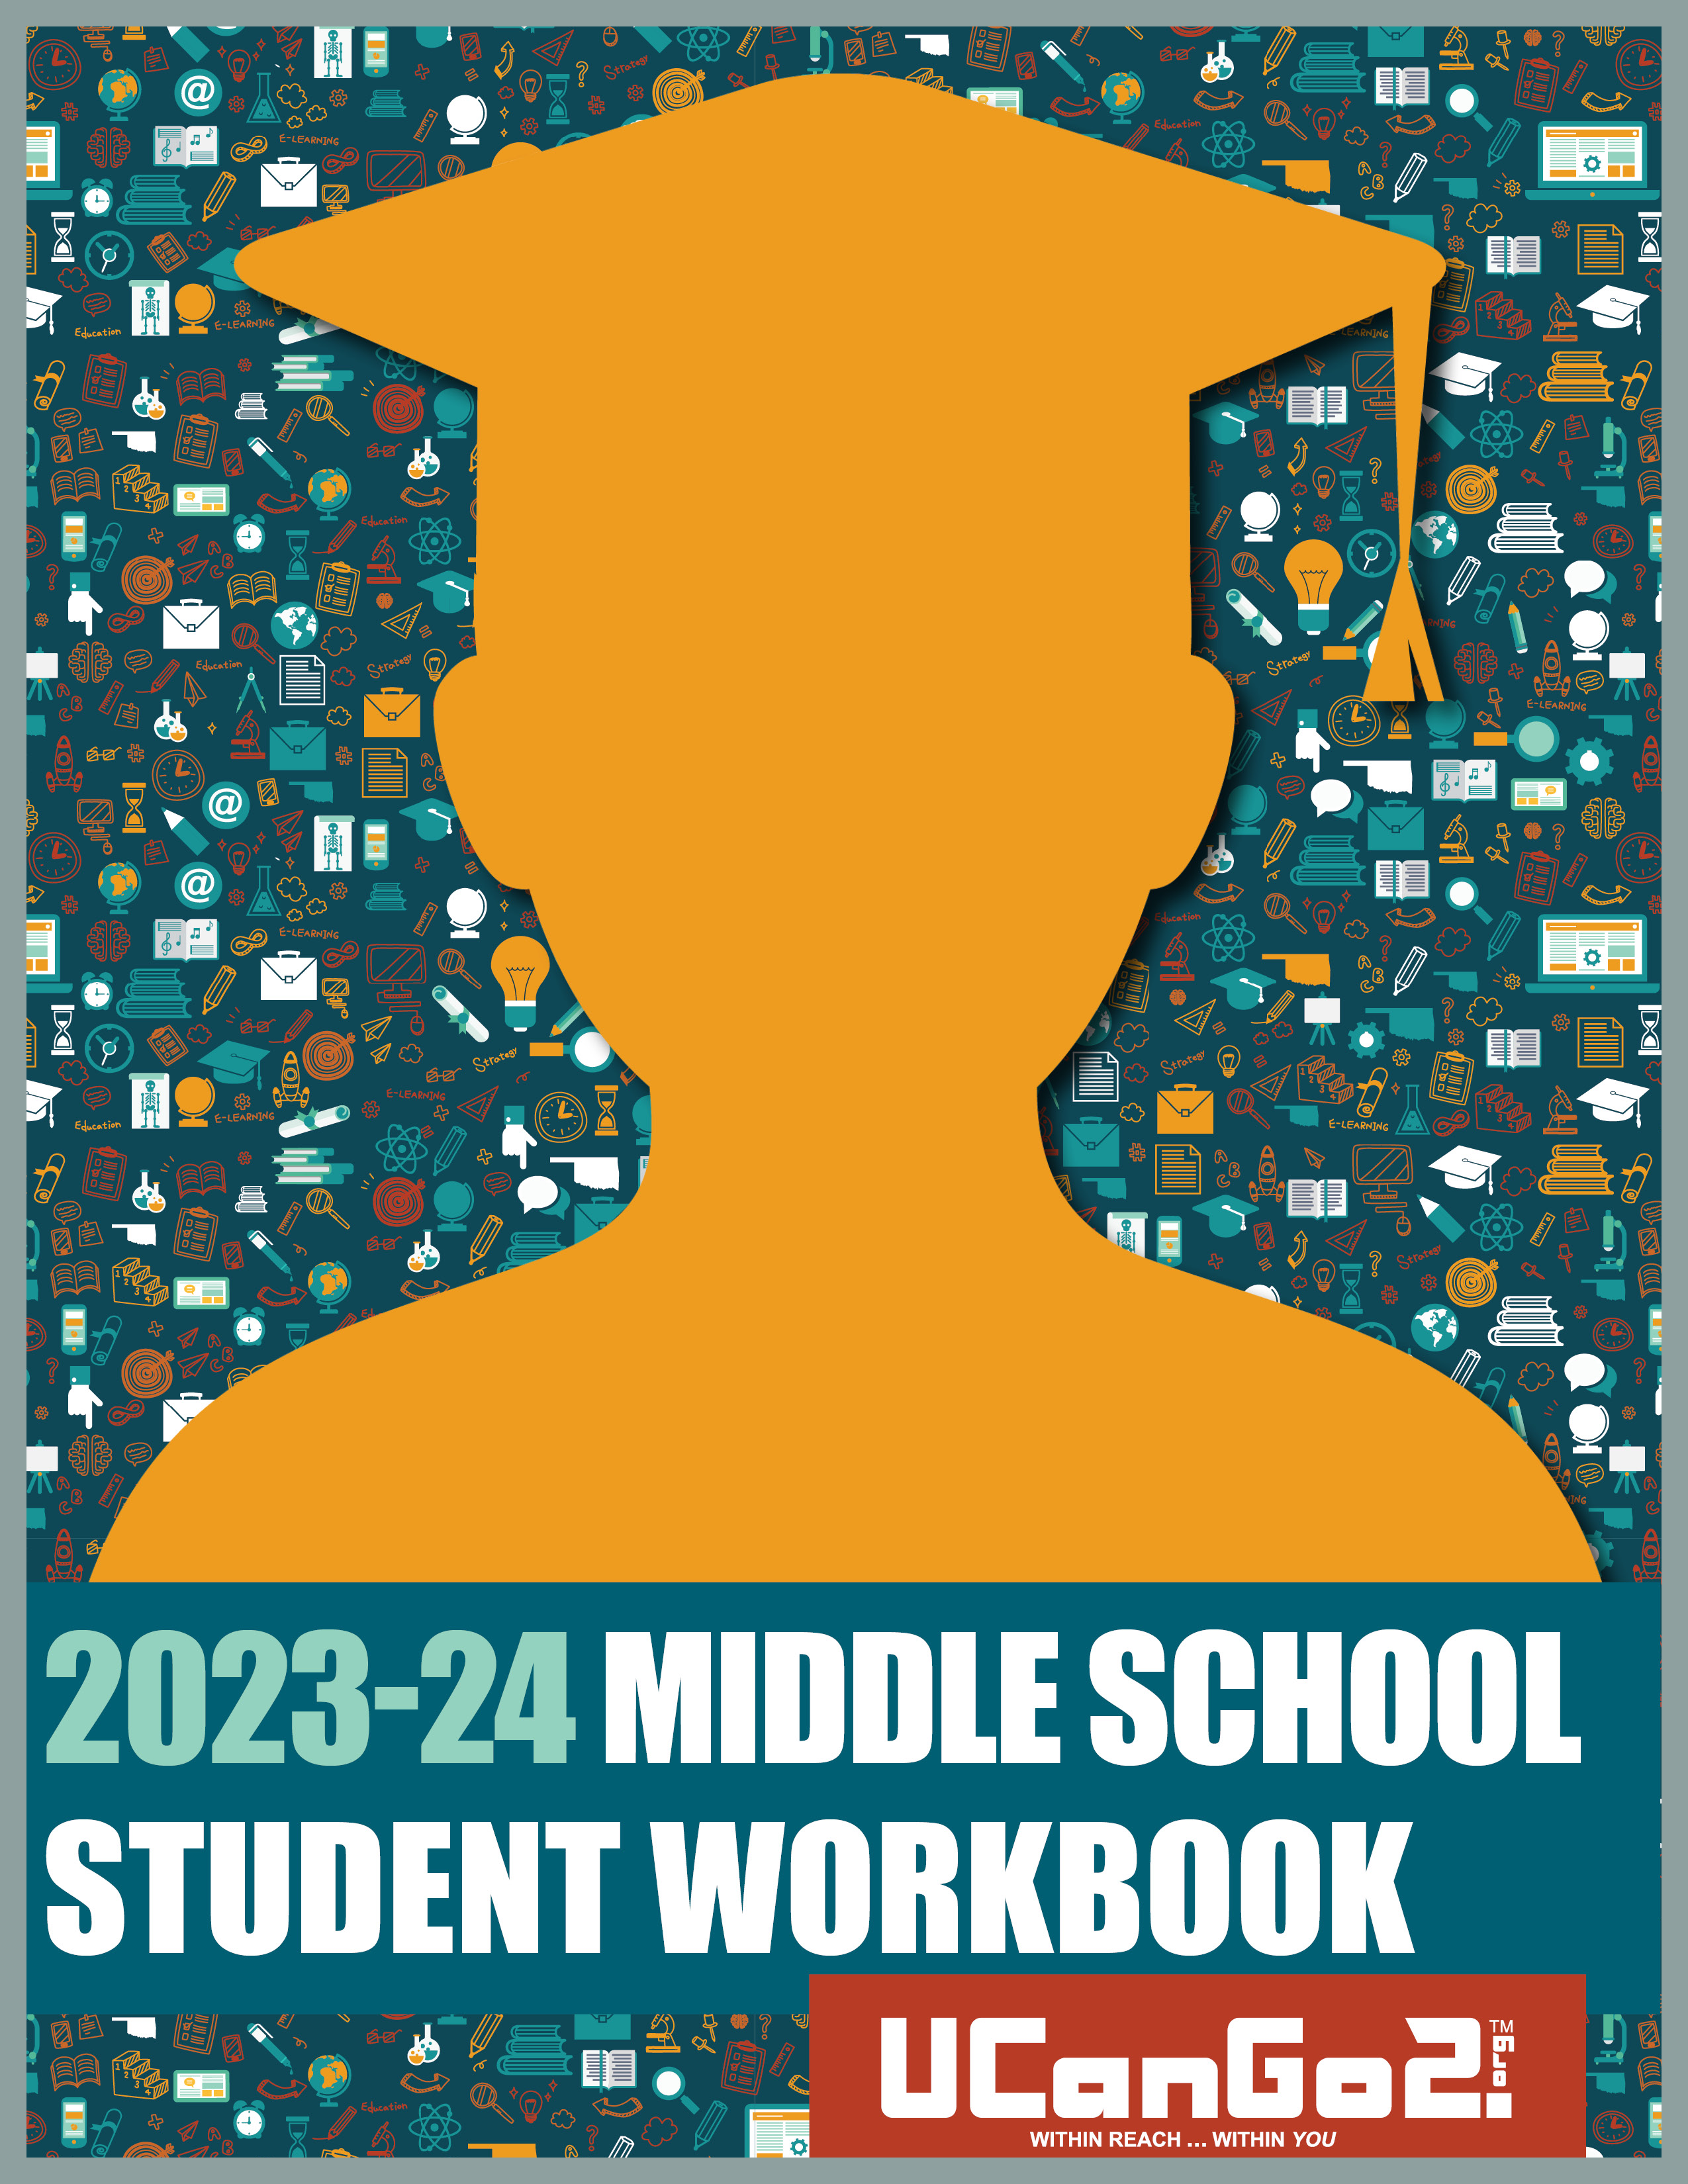 PDF of Middle School Student Workbook